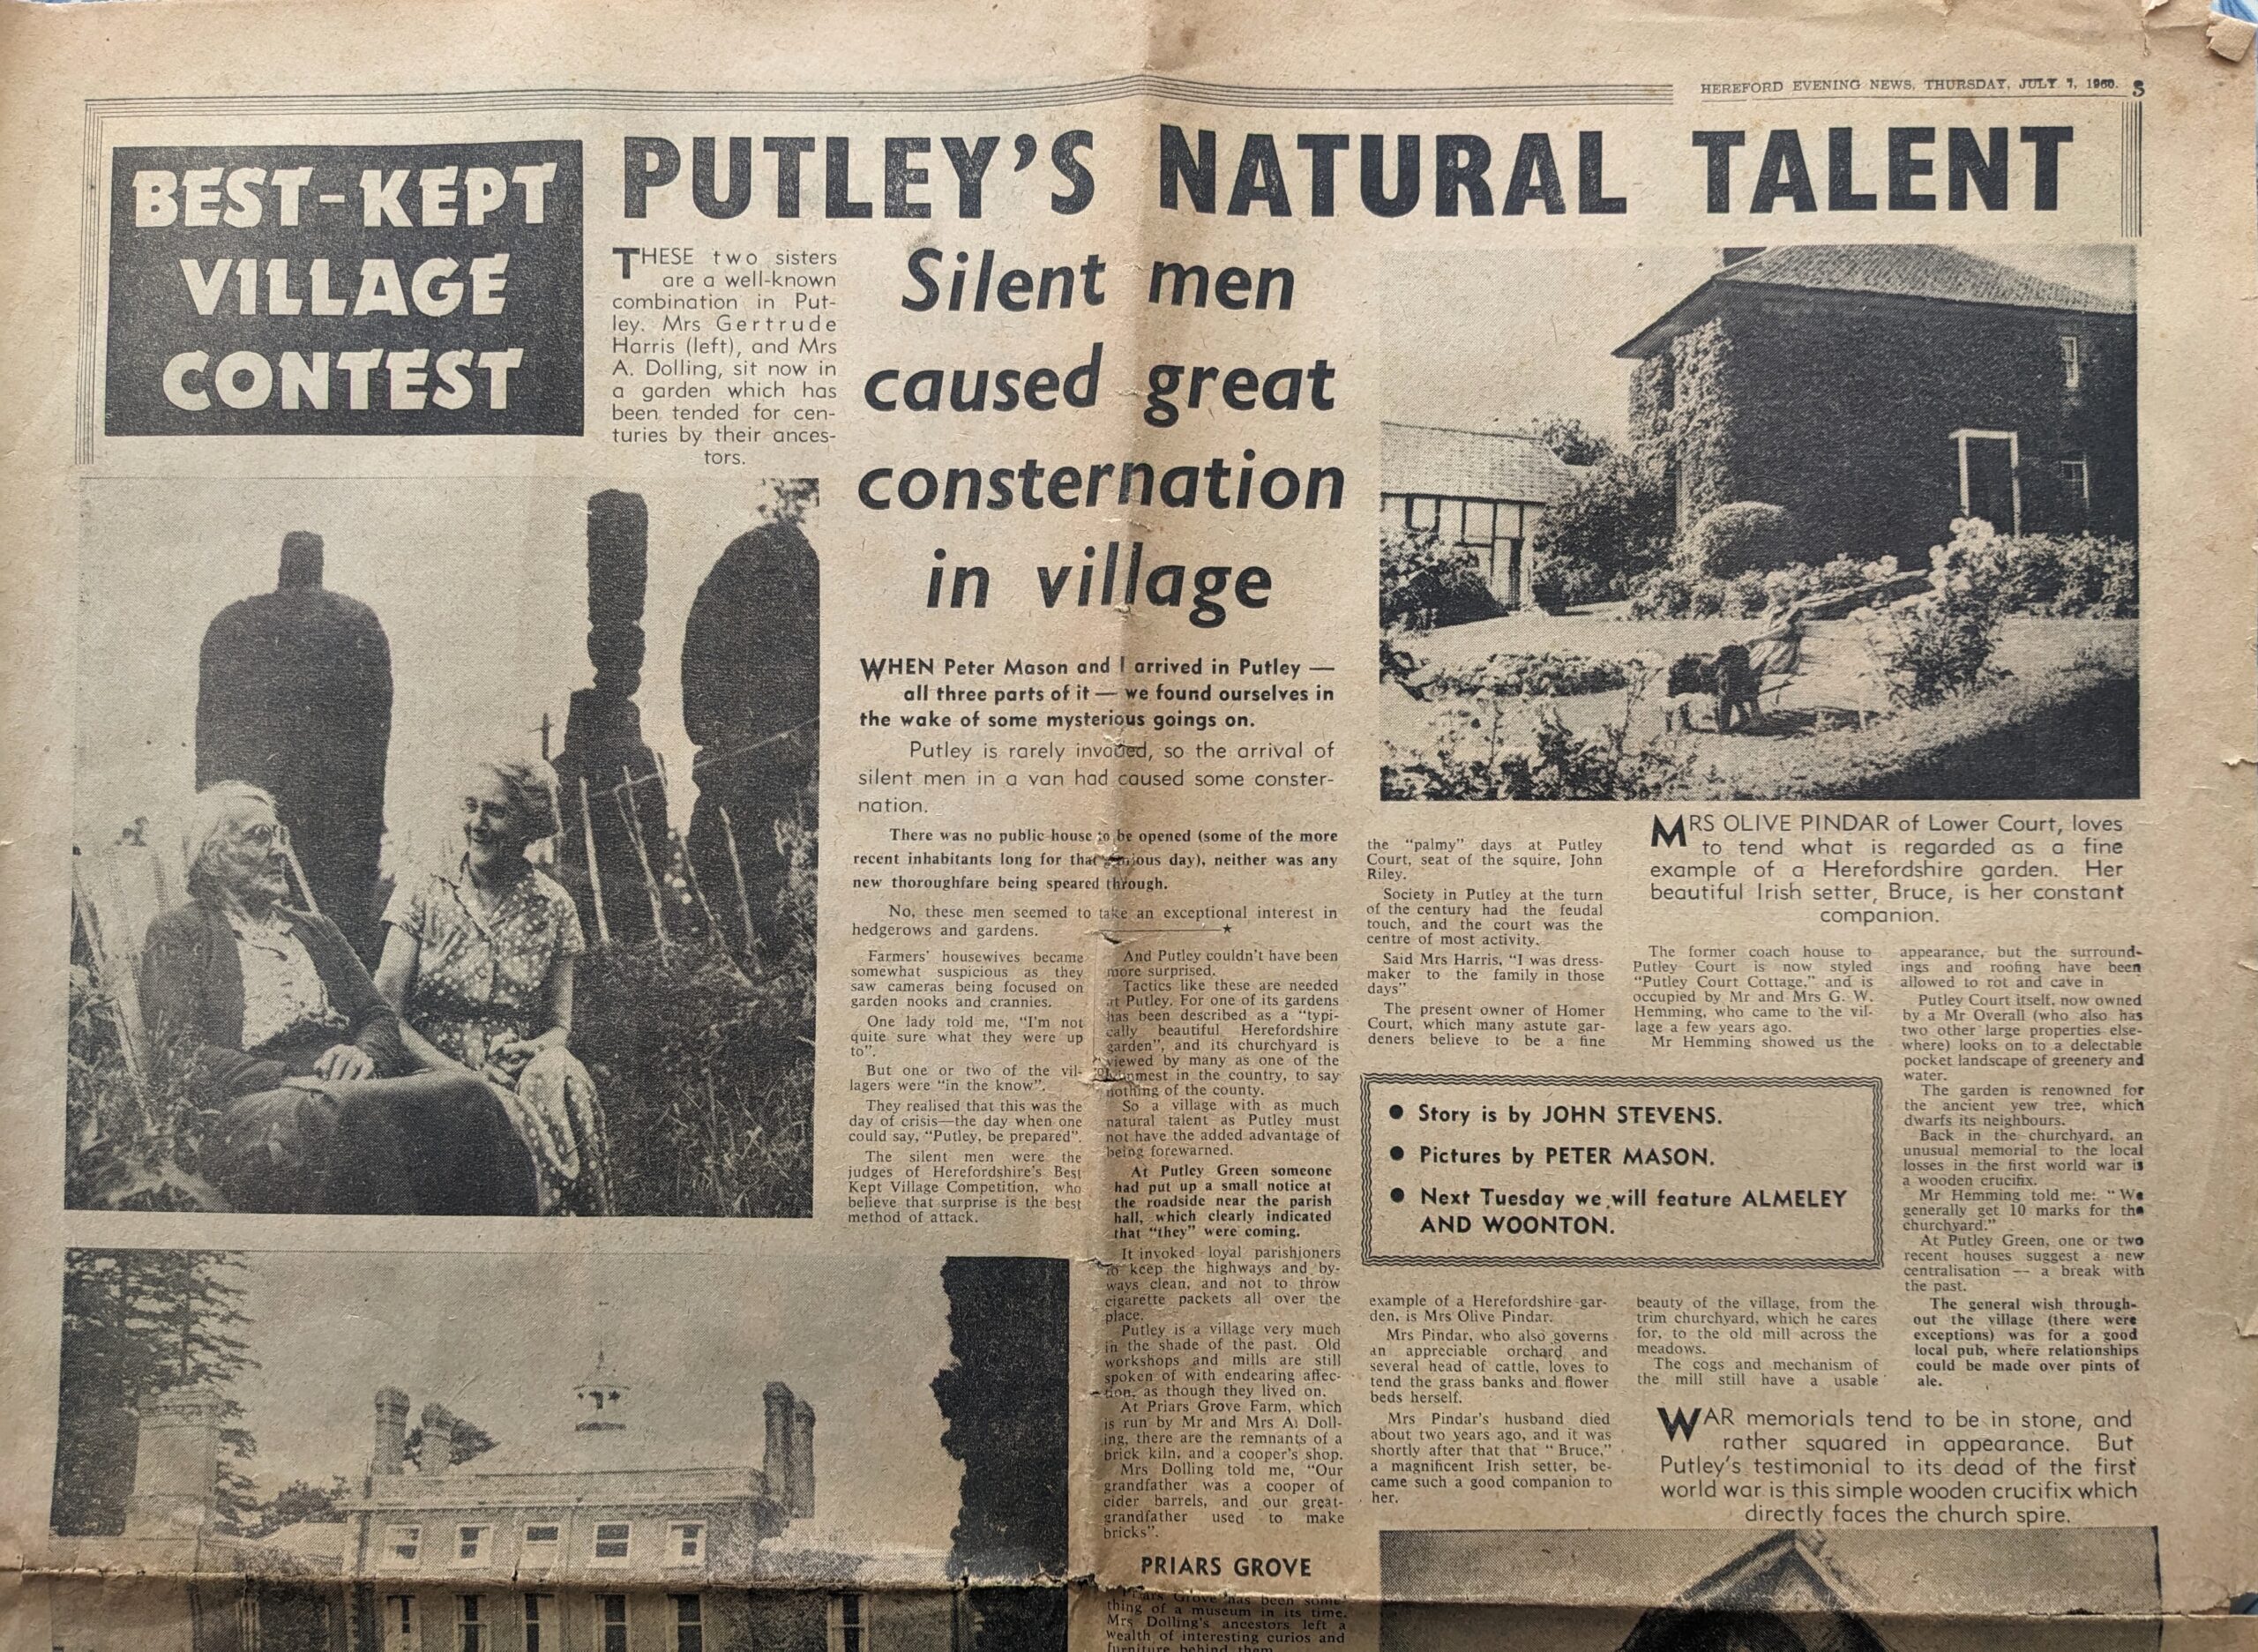 Hereford evening news 1960 of Putley gardens